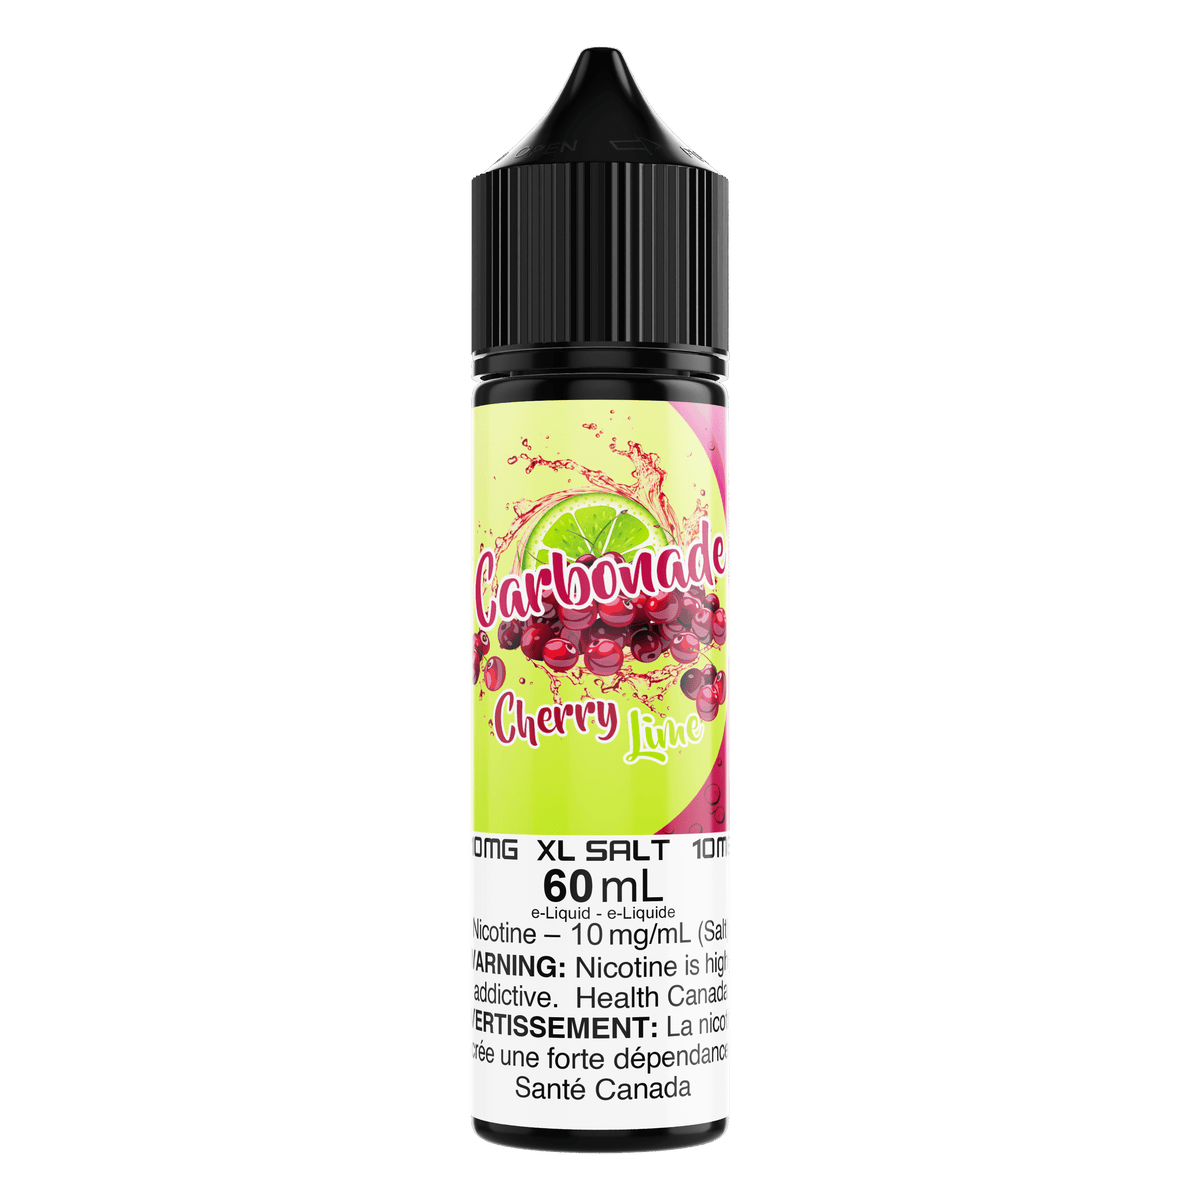 Carbonade XL Salt - Cherry Lime available on Canada online vape shop